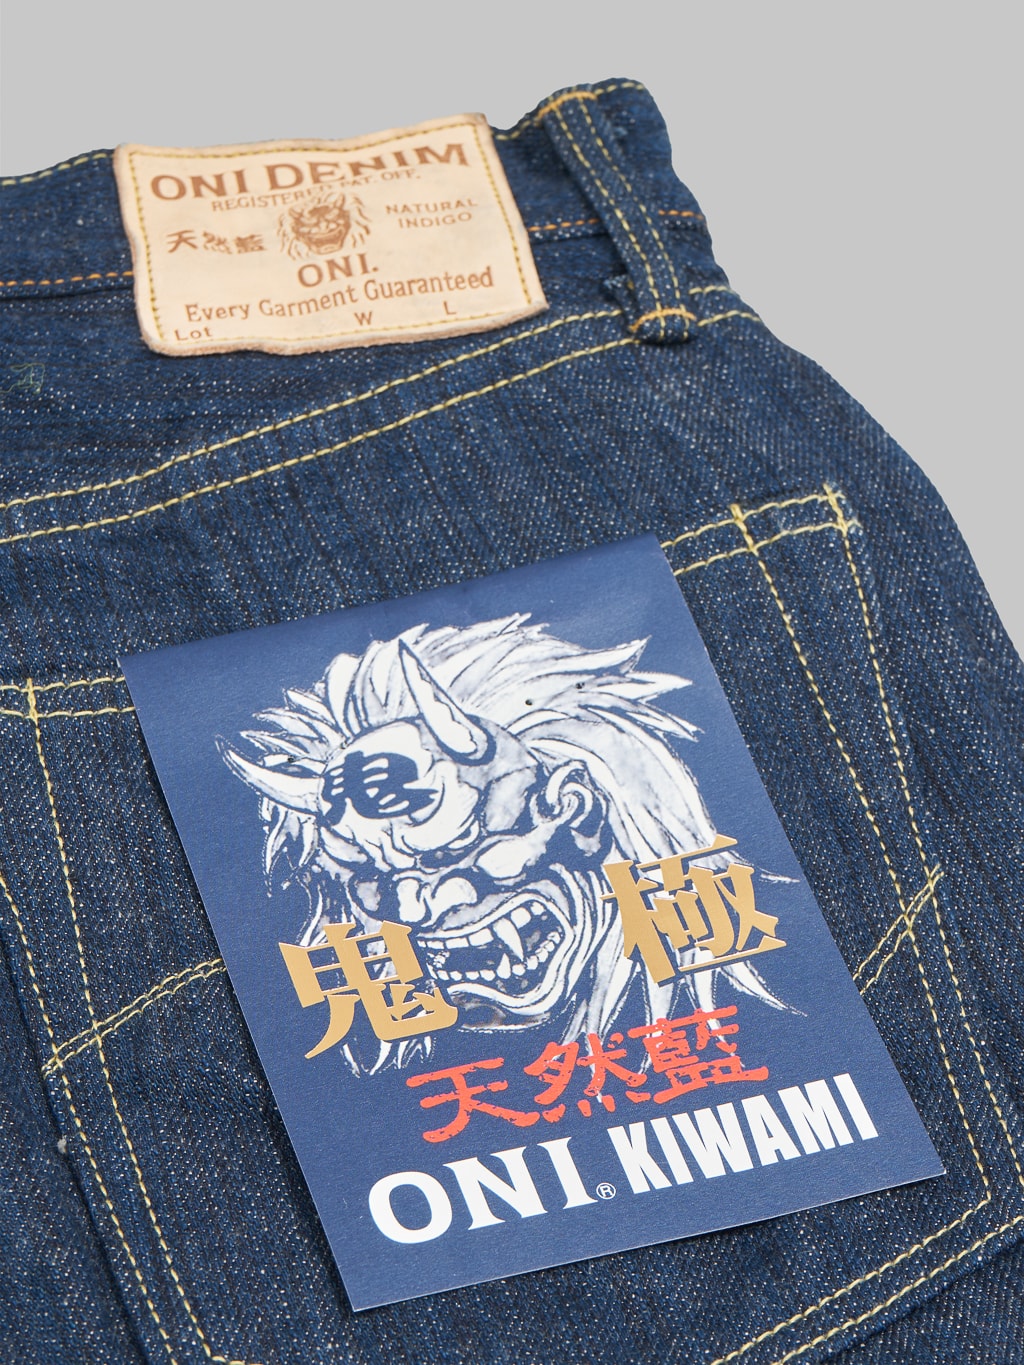 Oni denim kiwami indigo regular selvedge jeans super limited quantities